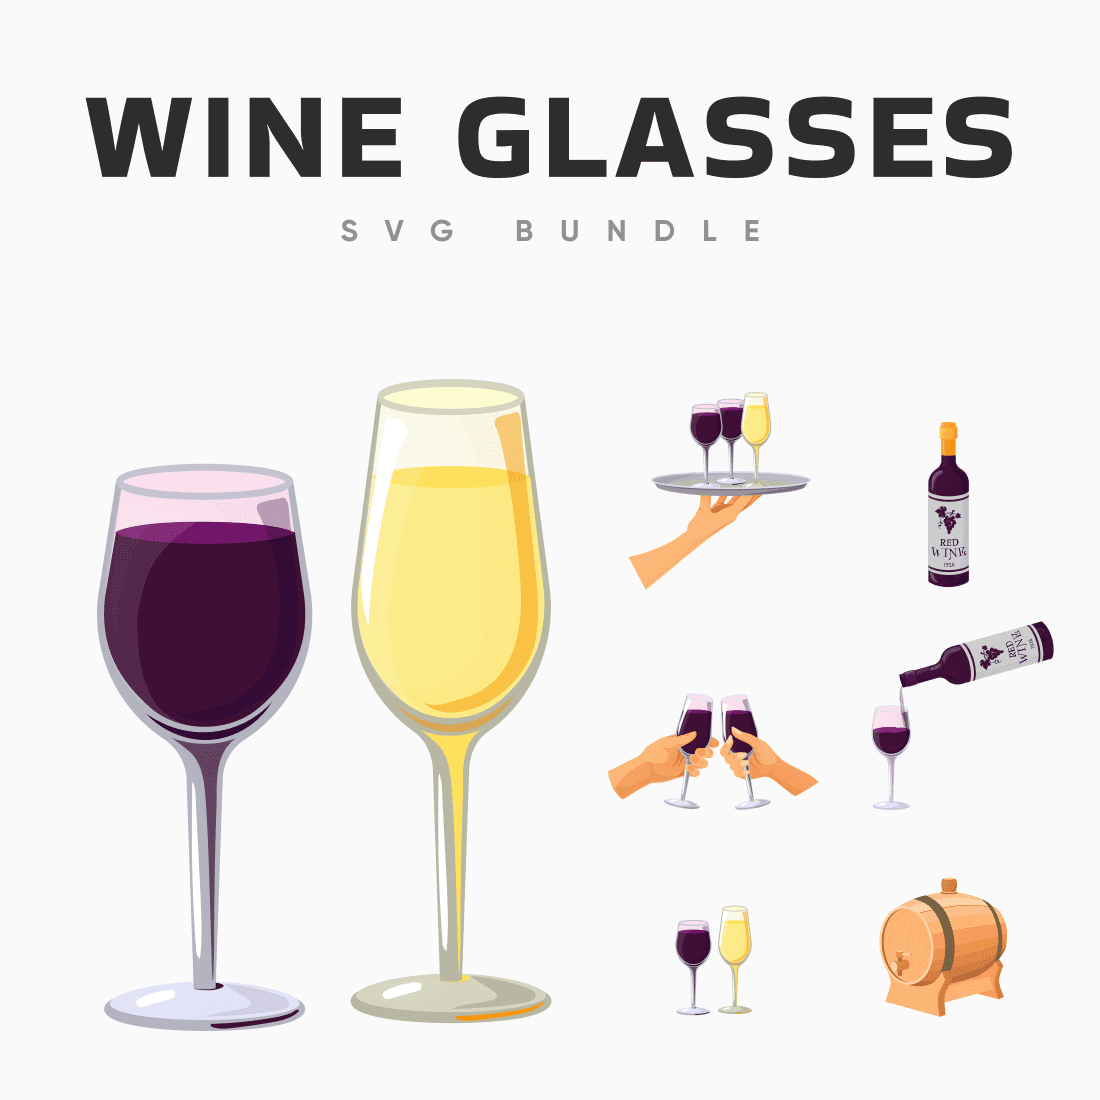 wine glass svg bundle cover image.